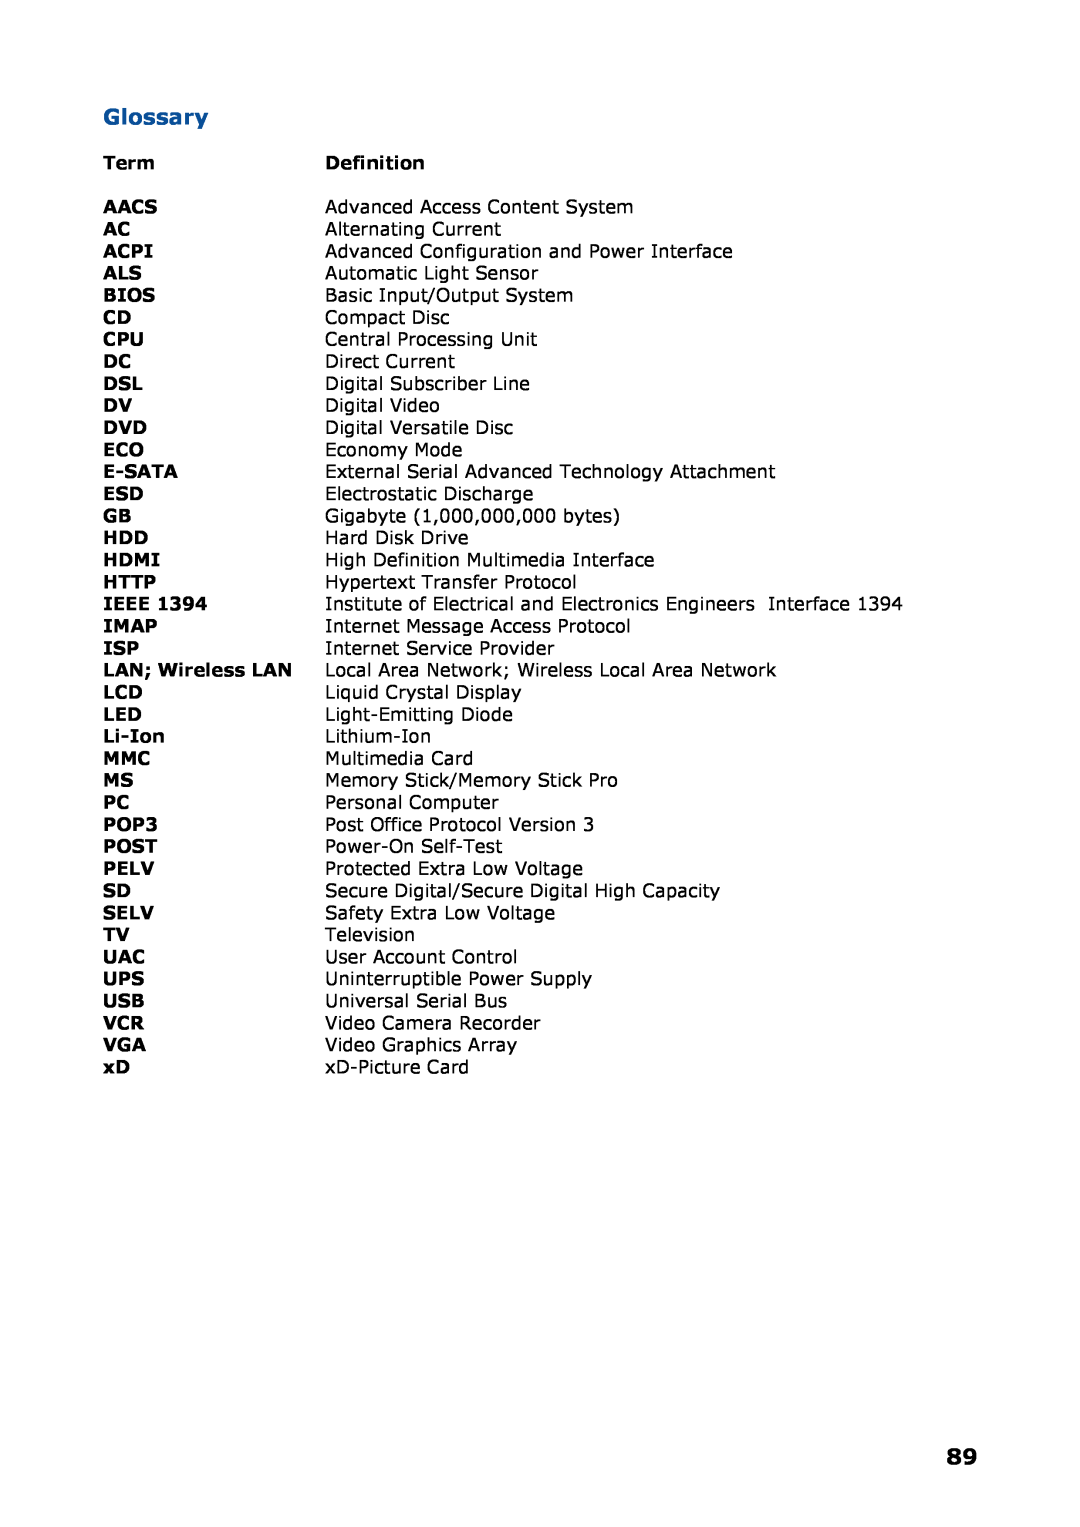 NEC P8510 Glossary, Term, Definition, Aacs, Acpi, Bios, E-Sata, Hdmi, Http, Ieee, Imap, Li-Ion, POP3, Post, Pelv, Selv 